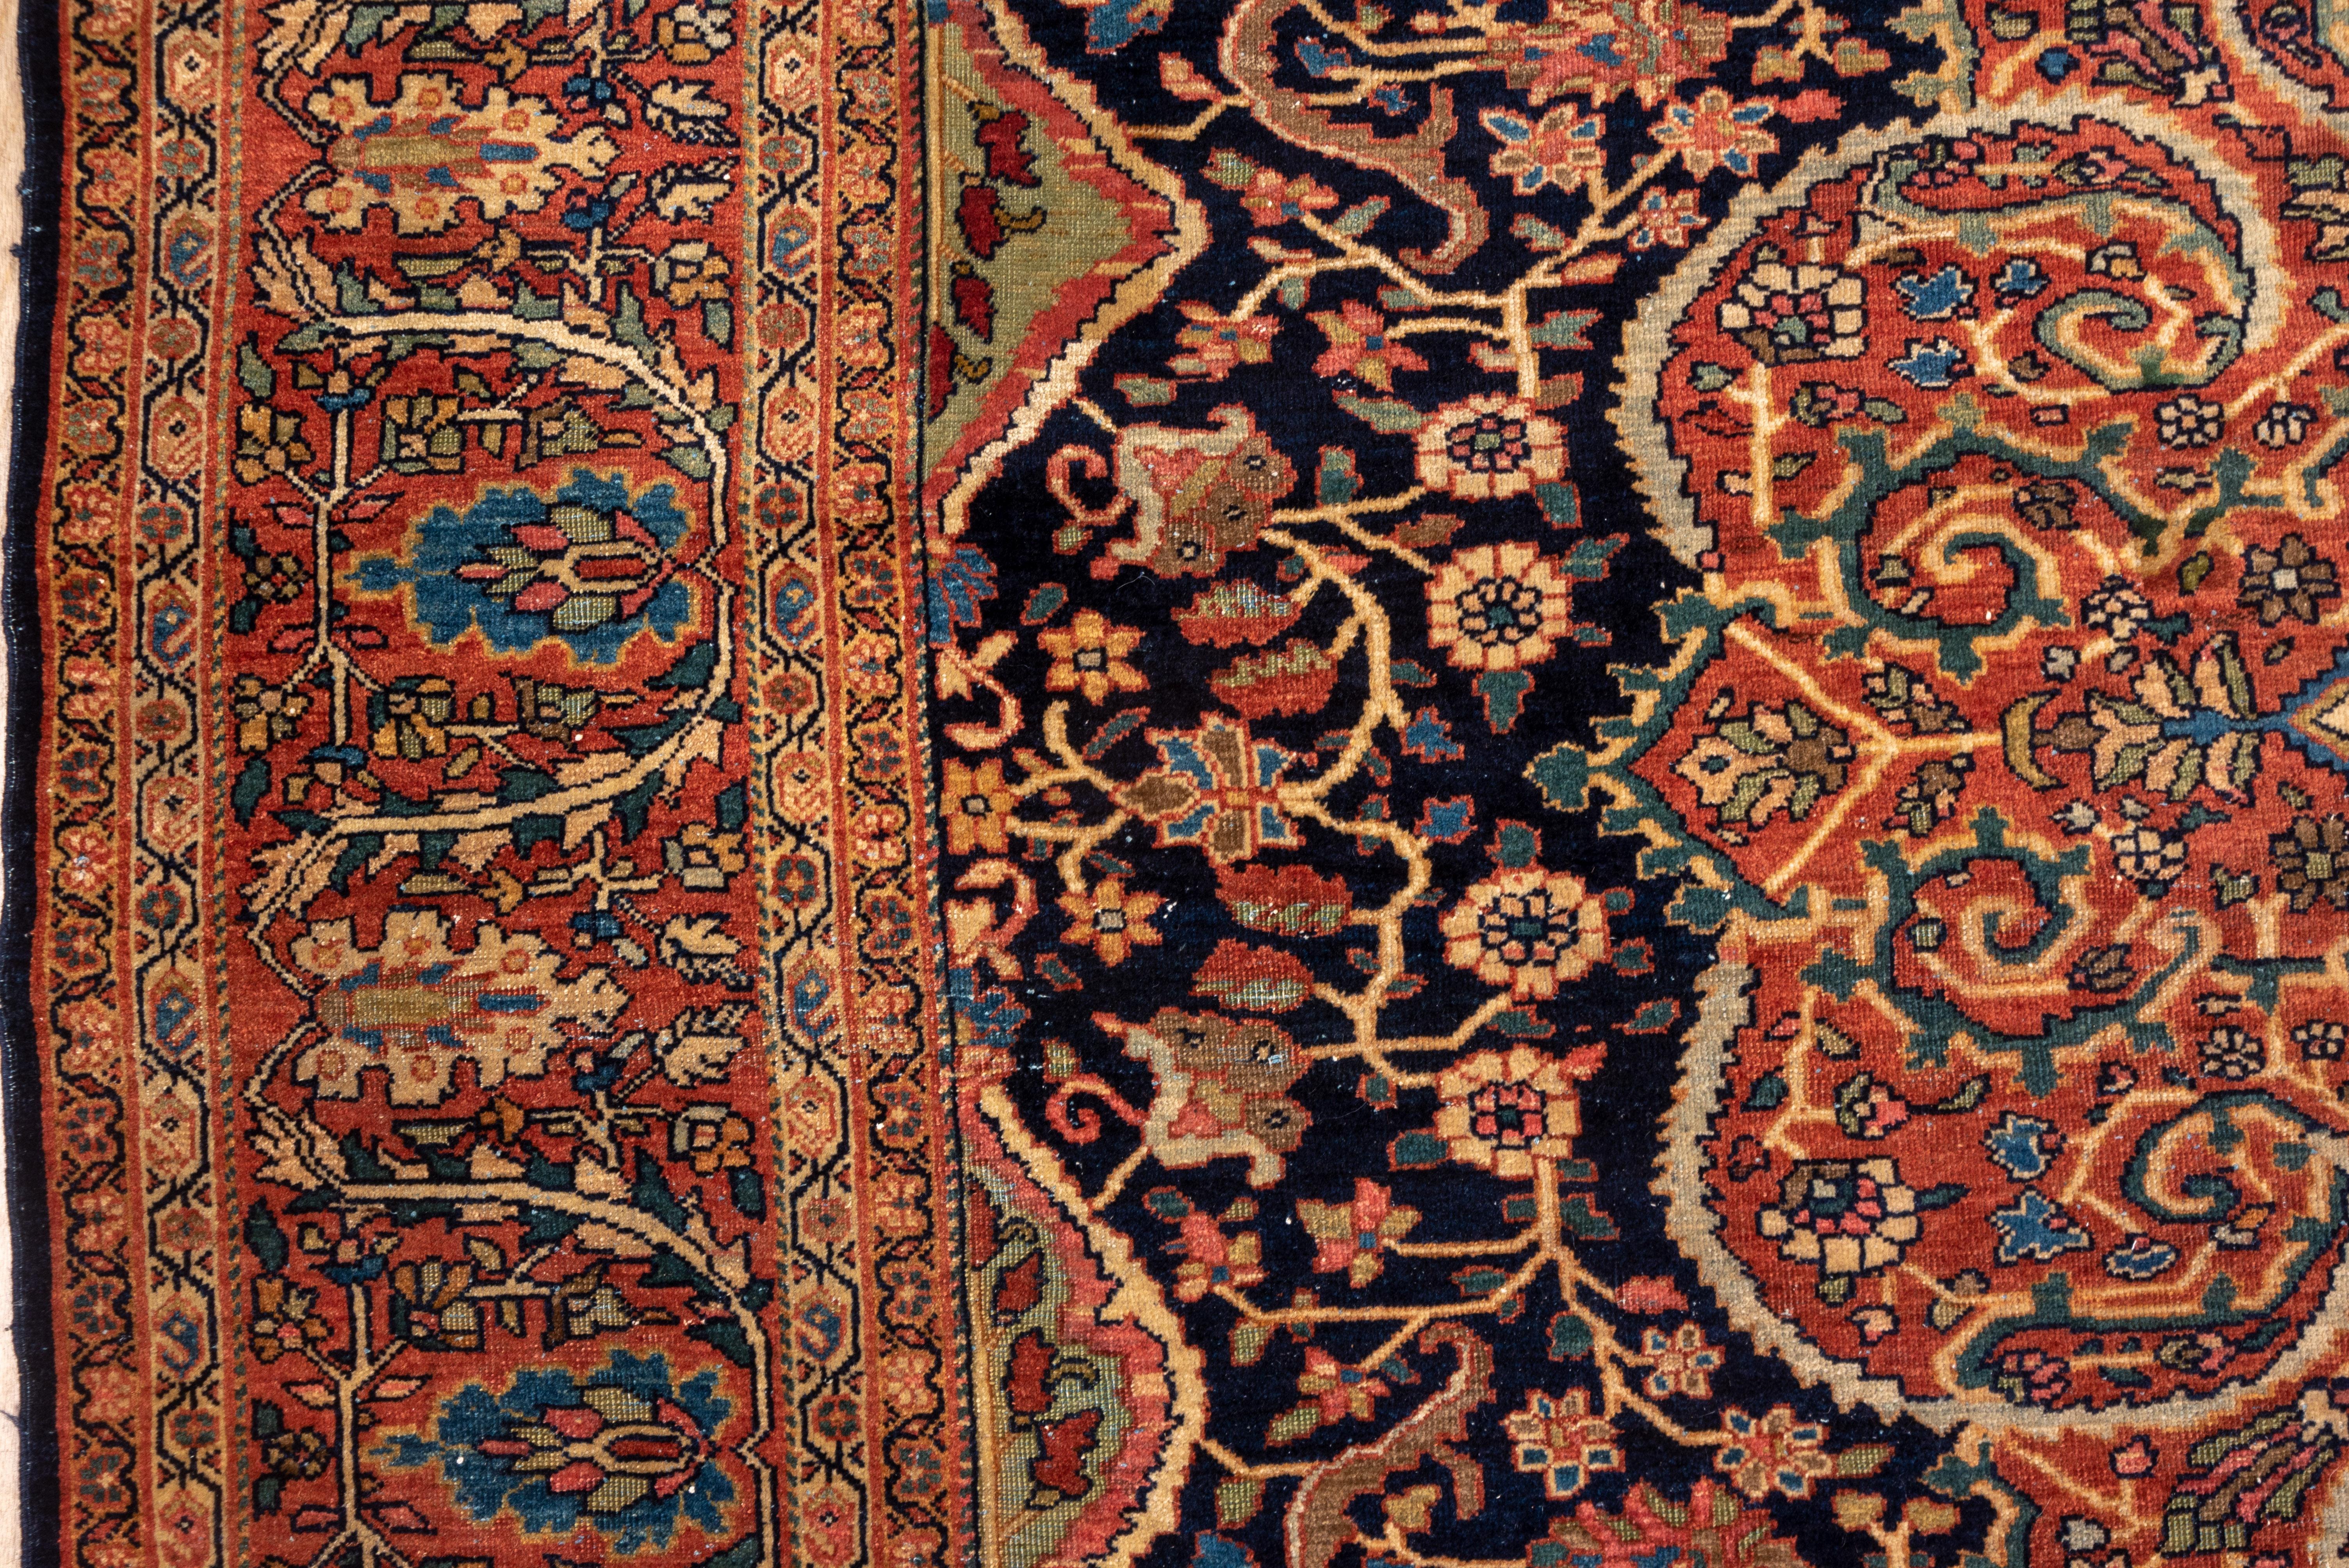 Wool Antique Colorful Persian Sarouk Farahan Carpet, Colorful Palette